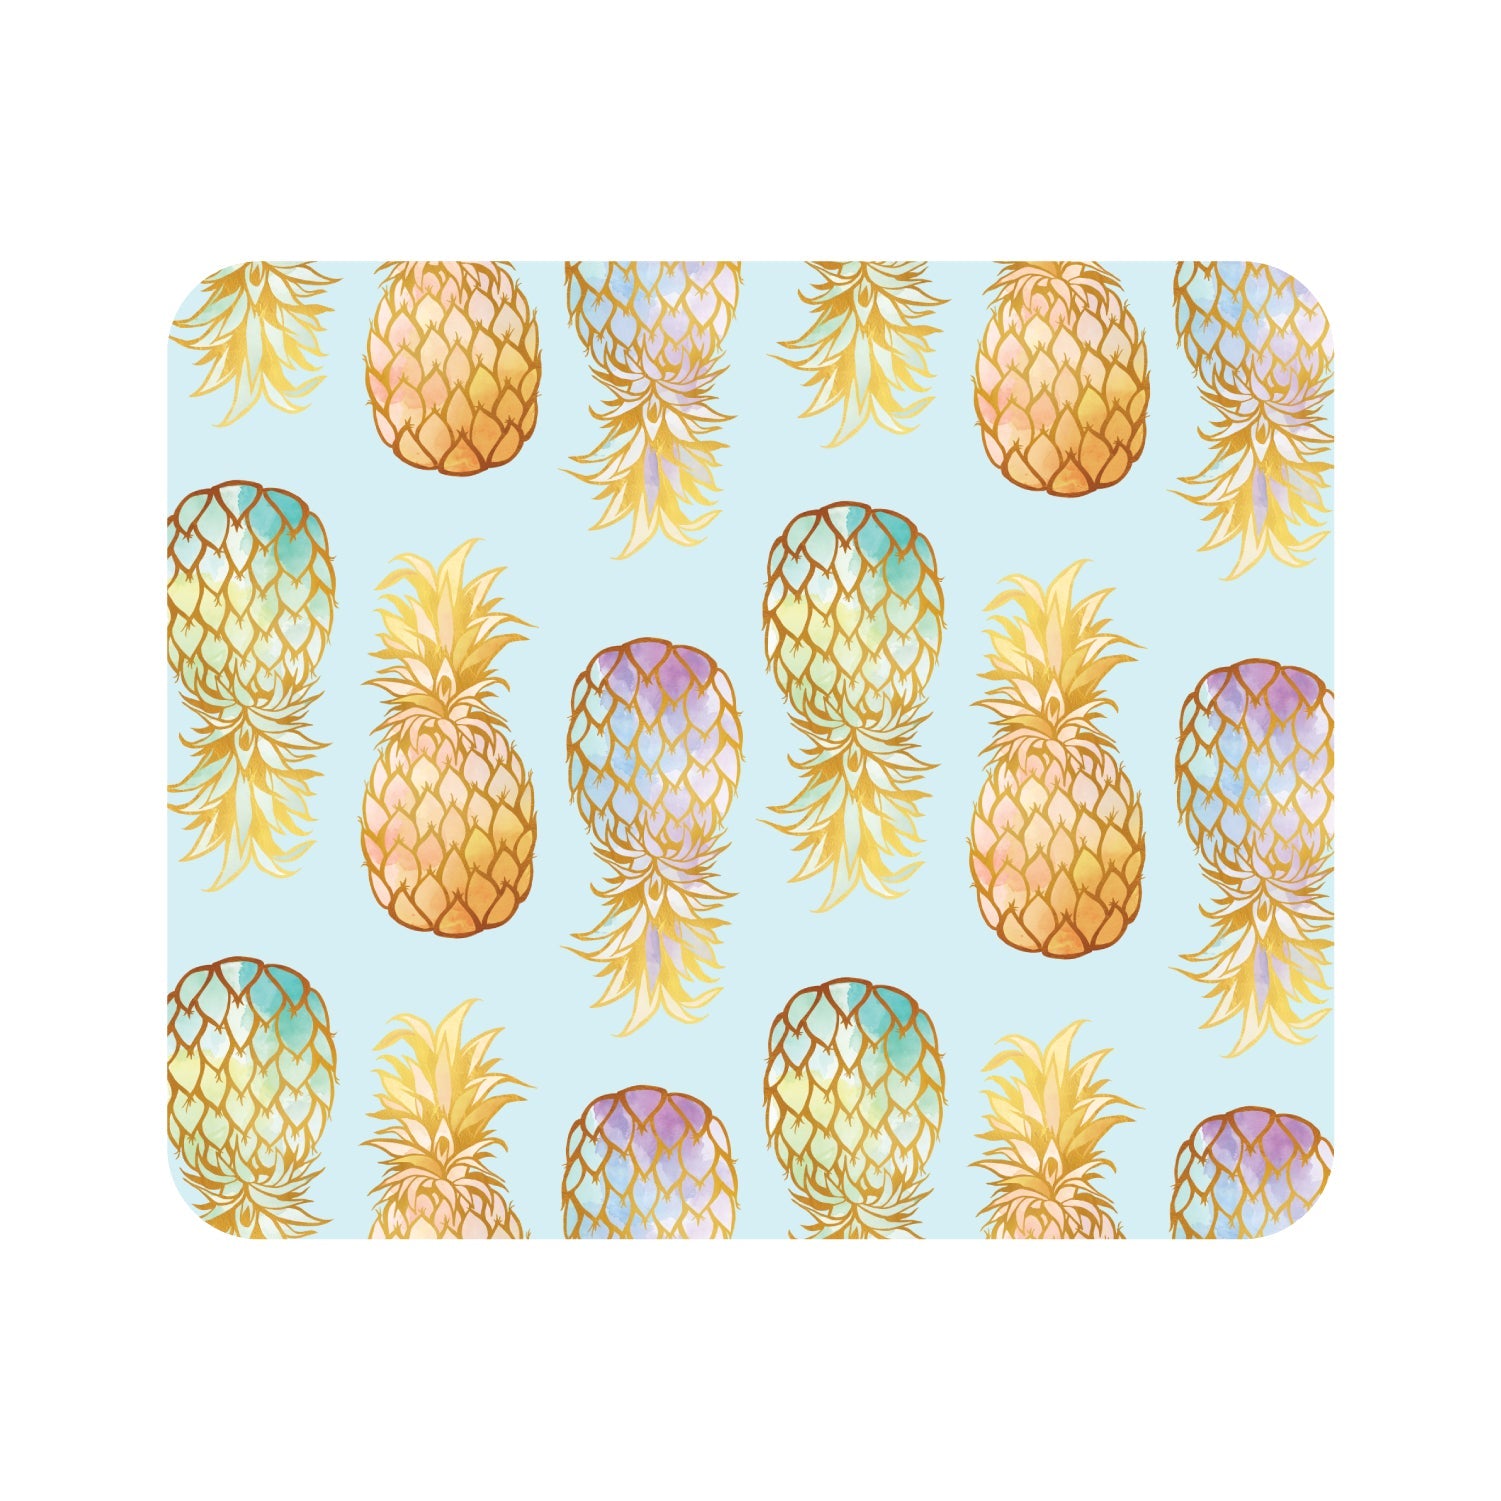 OTM Essentials Prints Series Mousepad, Golden Pineapple